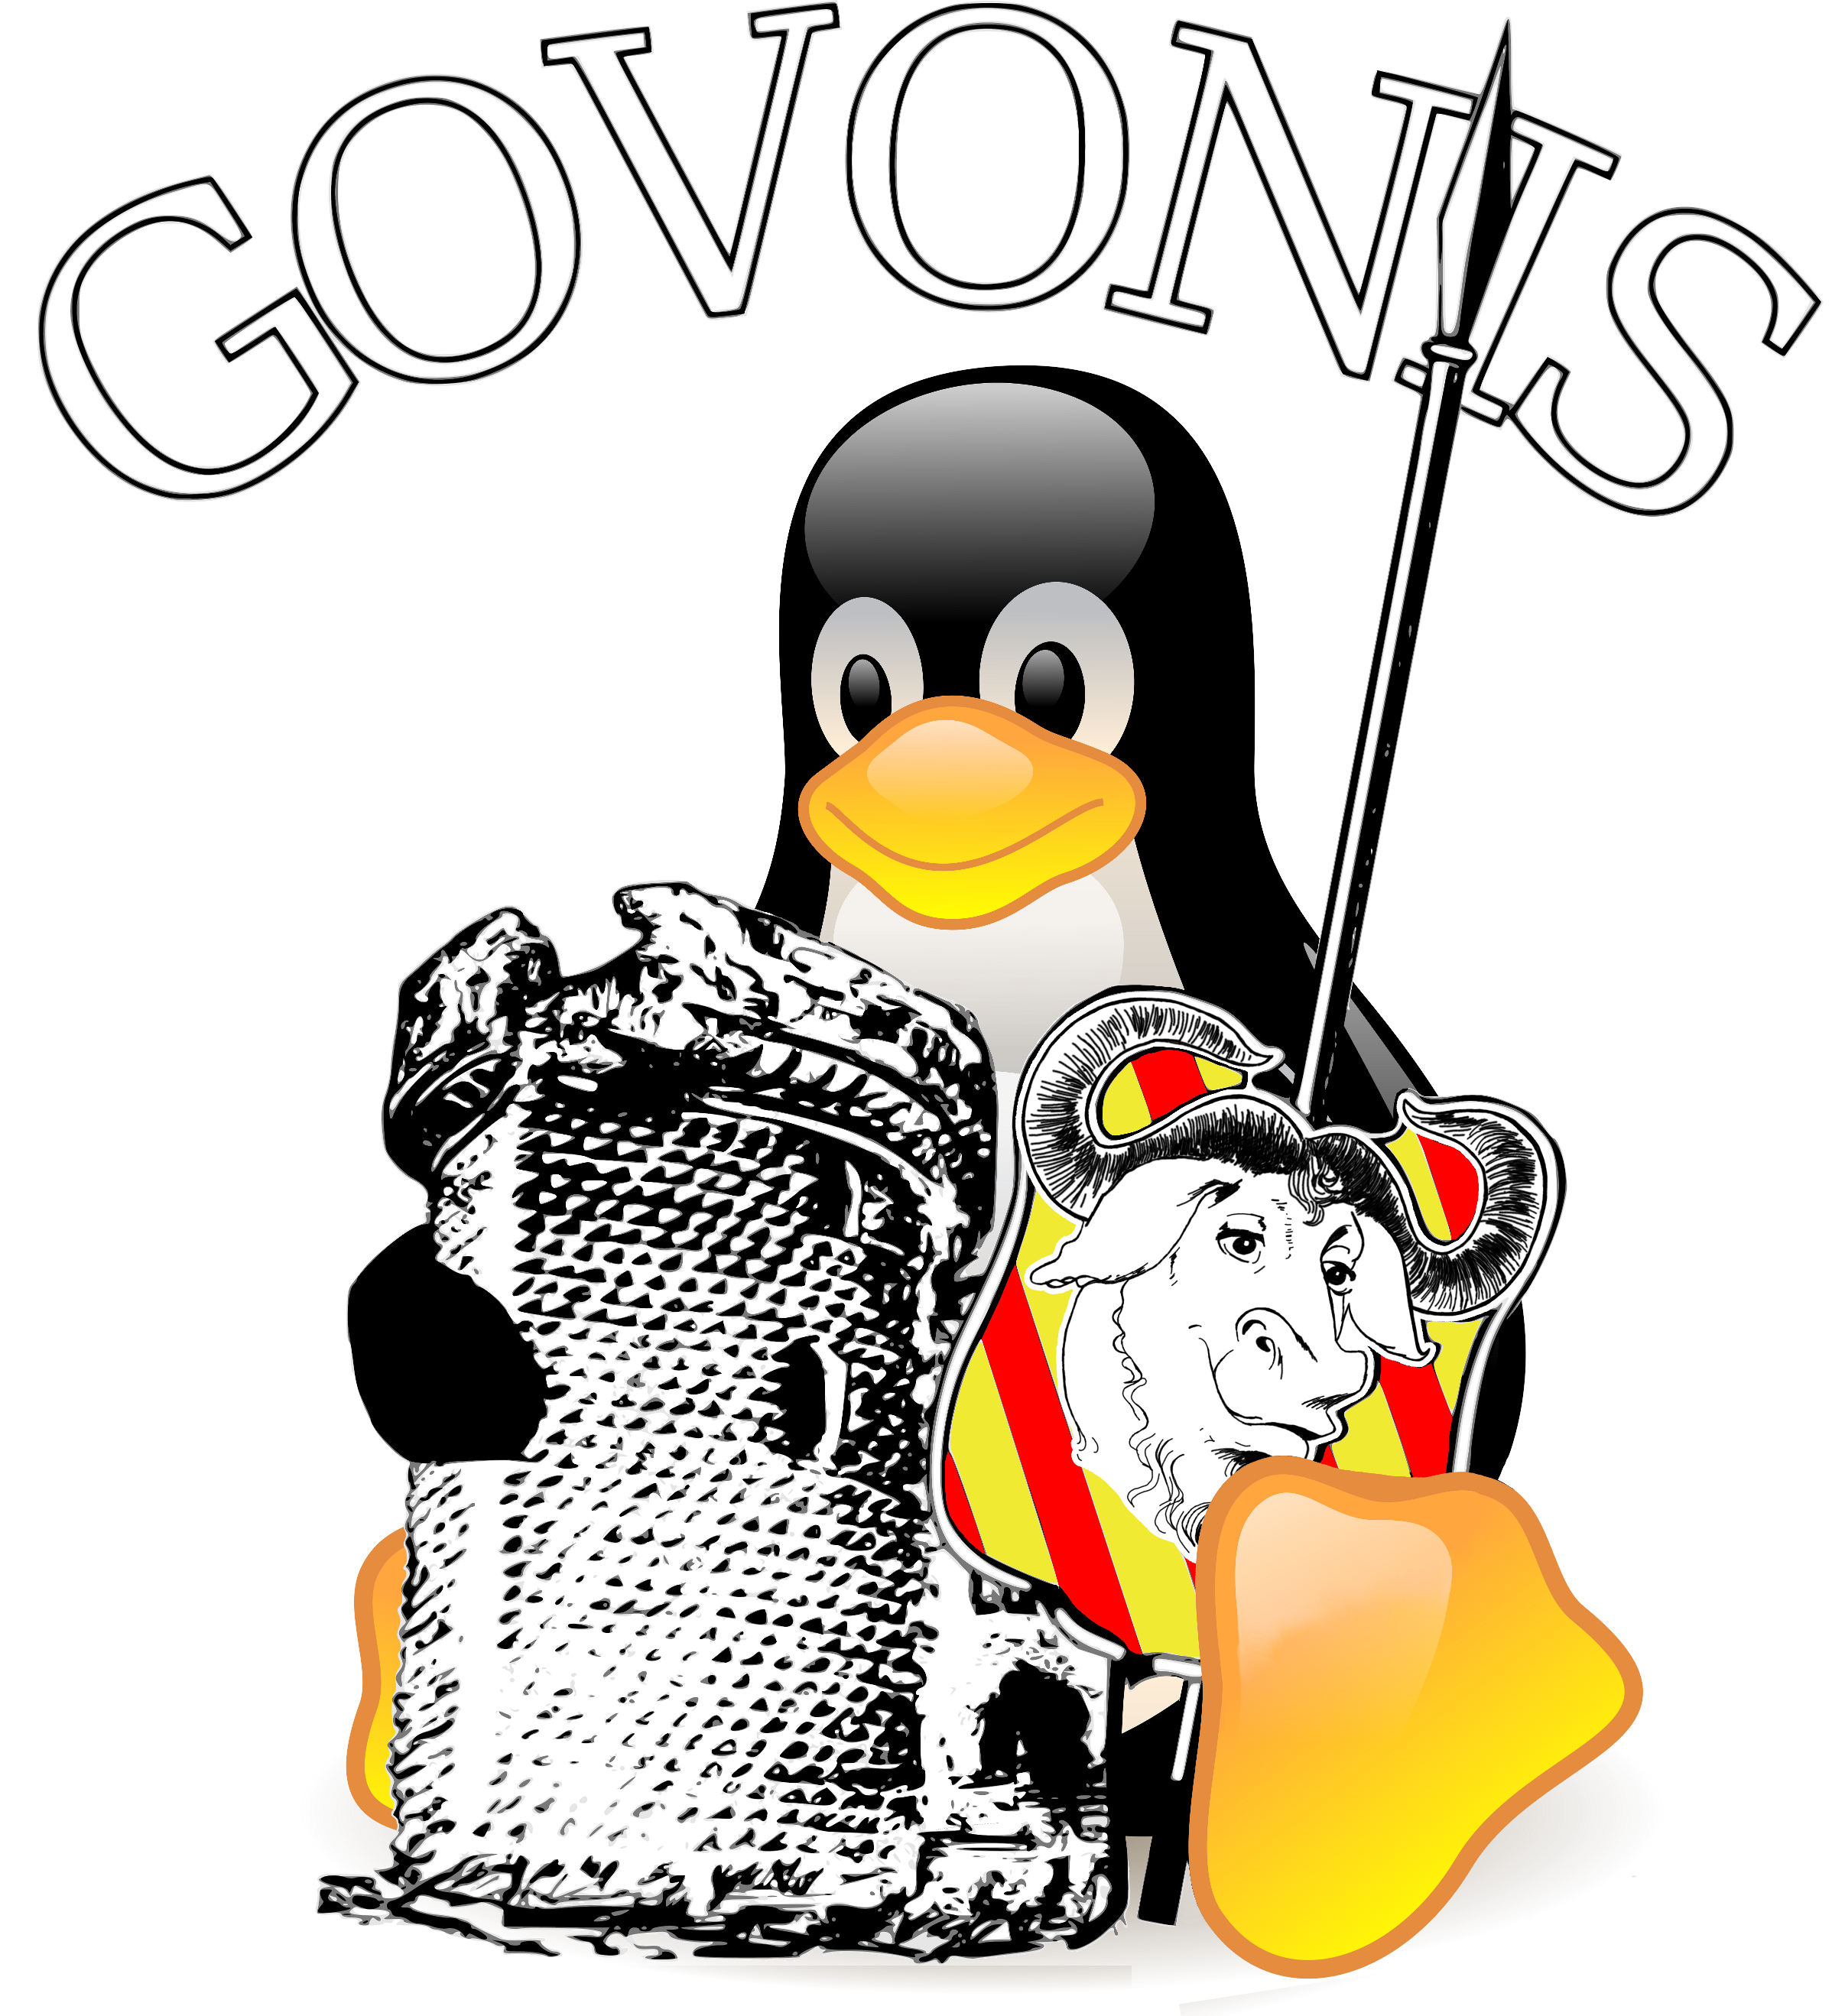 Associazione Govonis